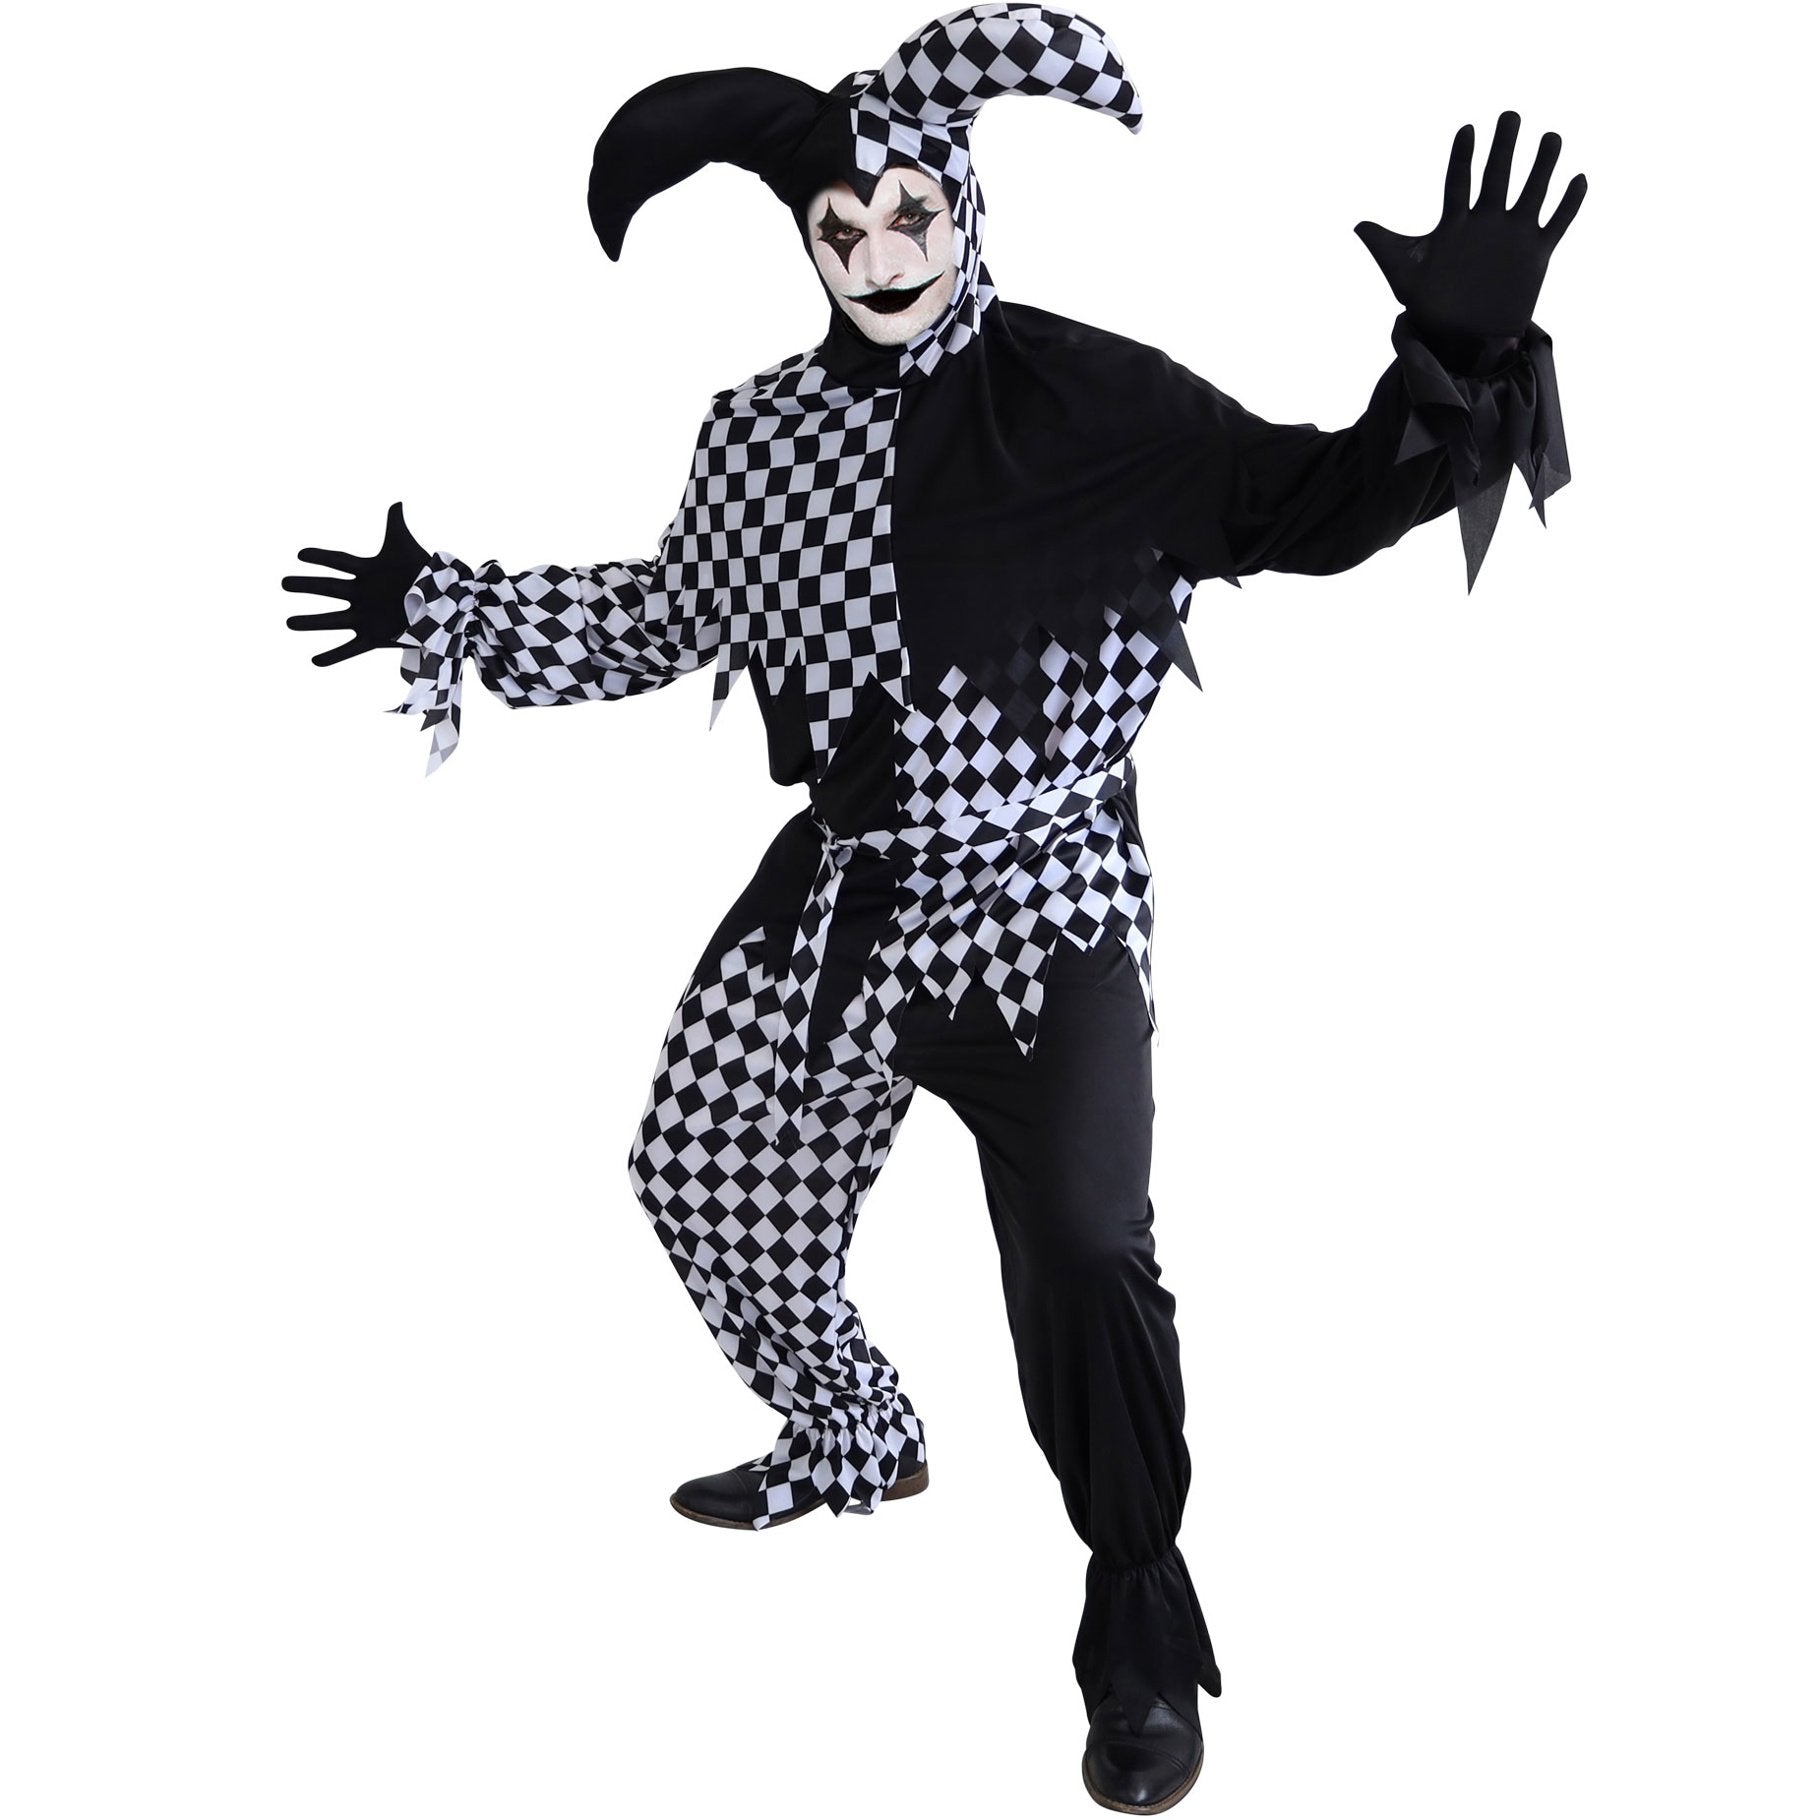 Costume Adult Jester Black & White Harlequin Xlarge